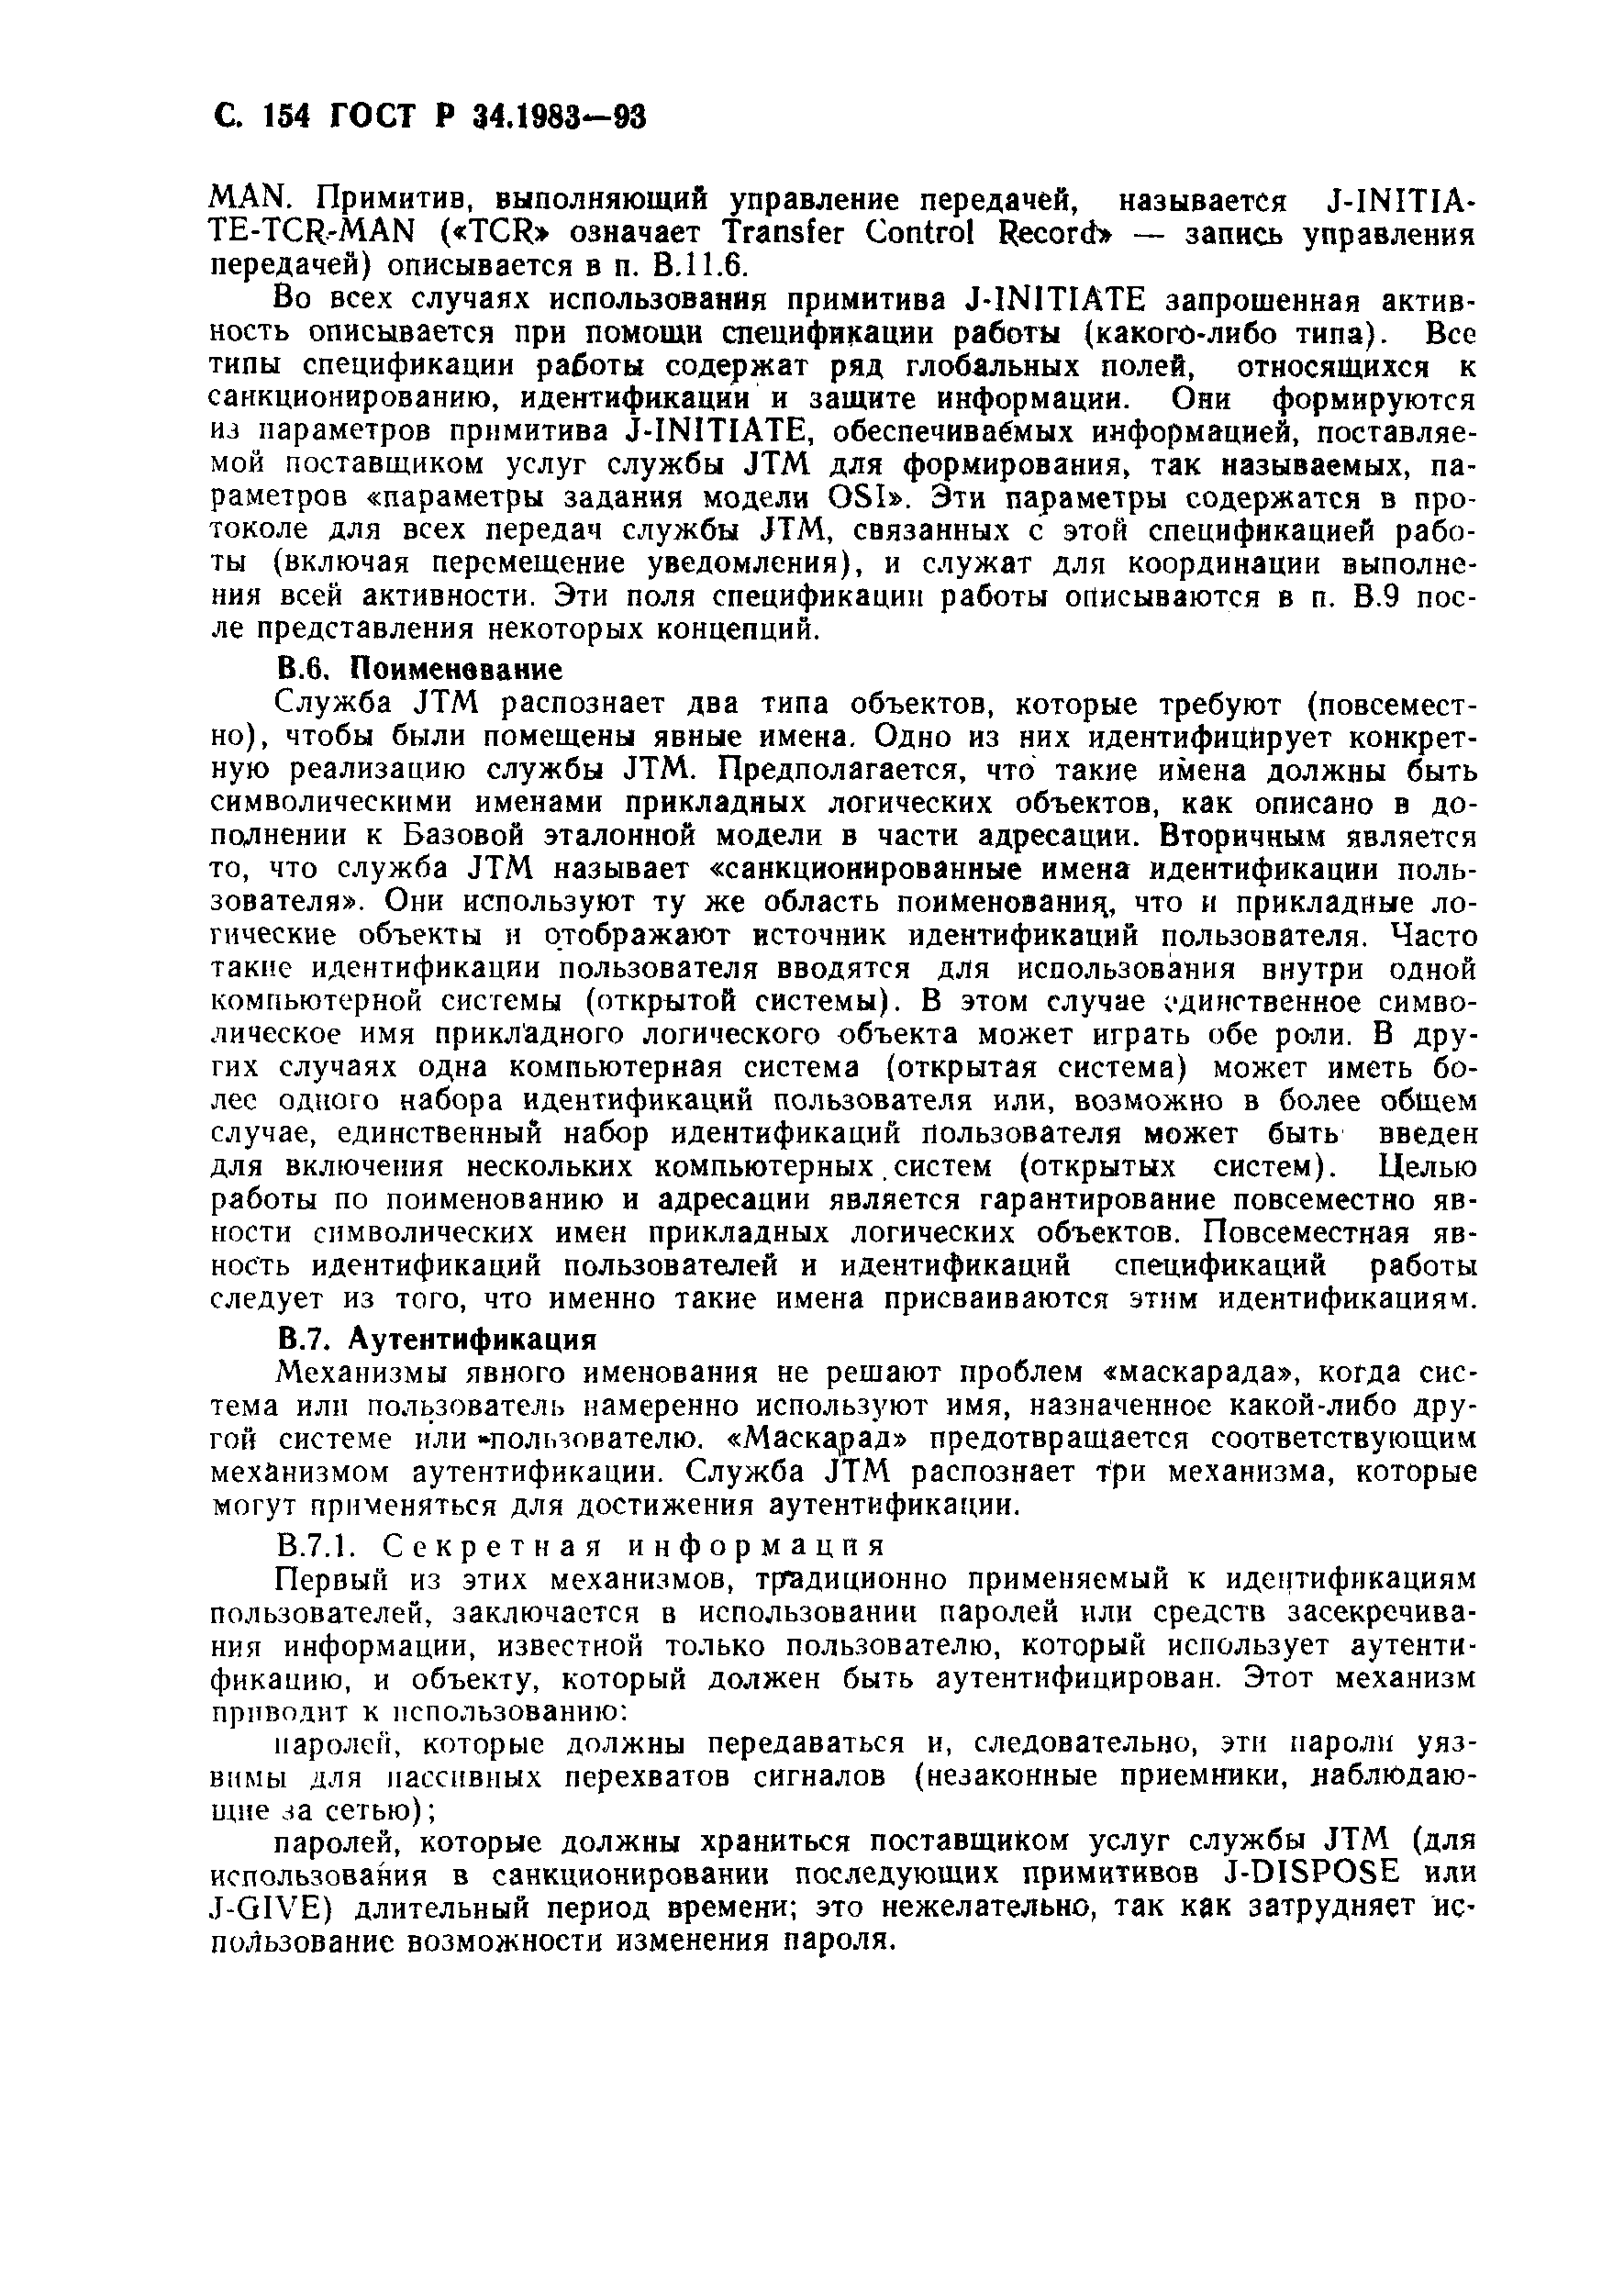 ГОСТ Р 34.1983-93. Страница 155